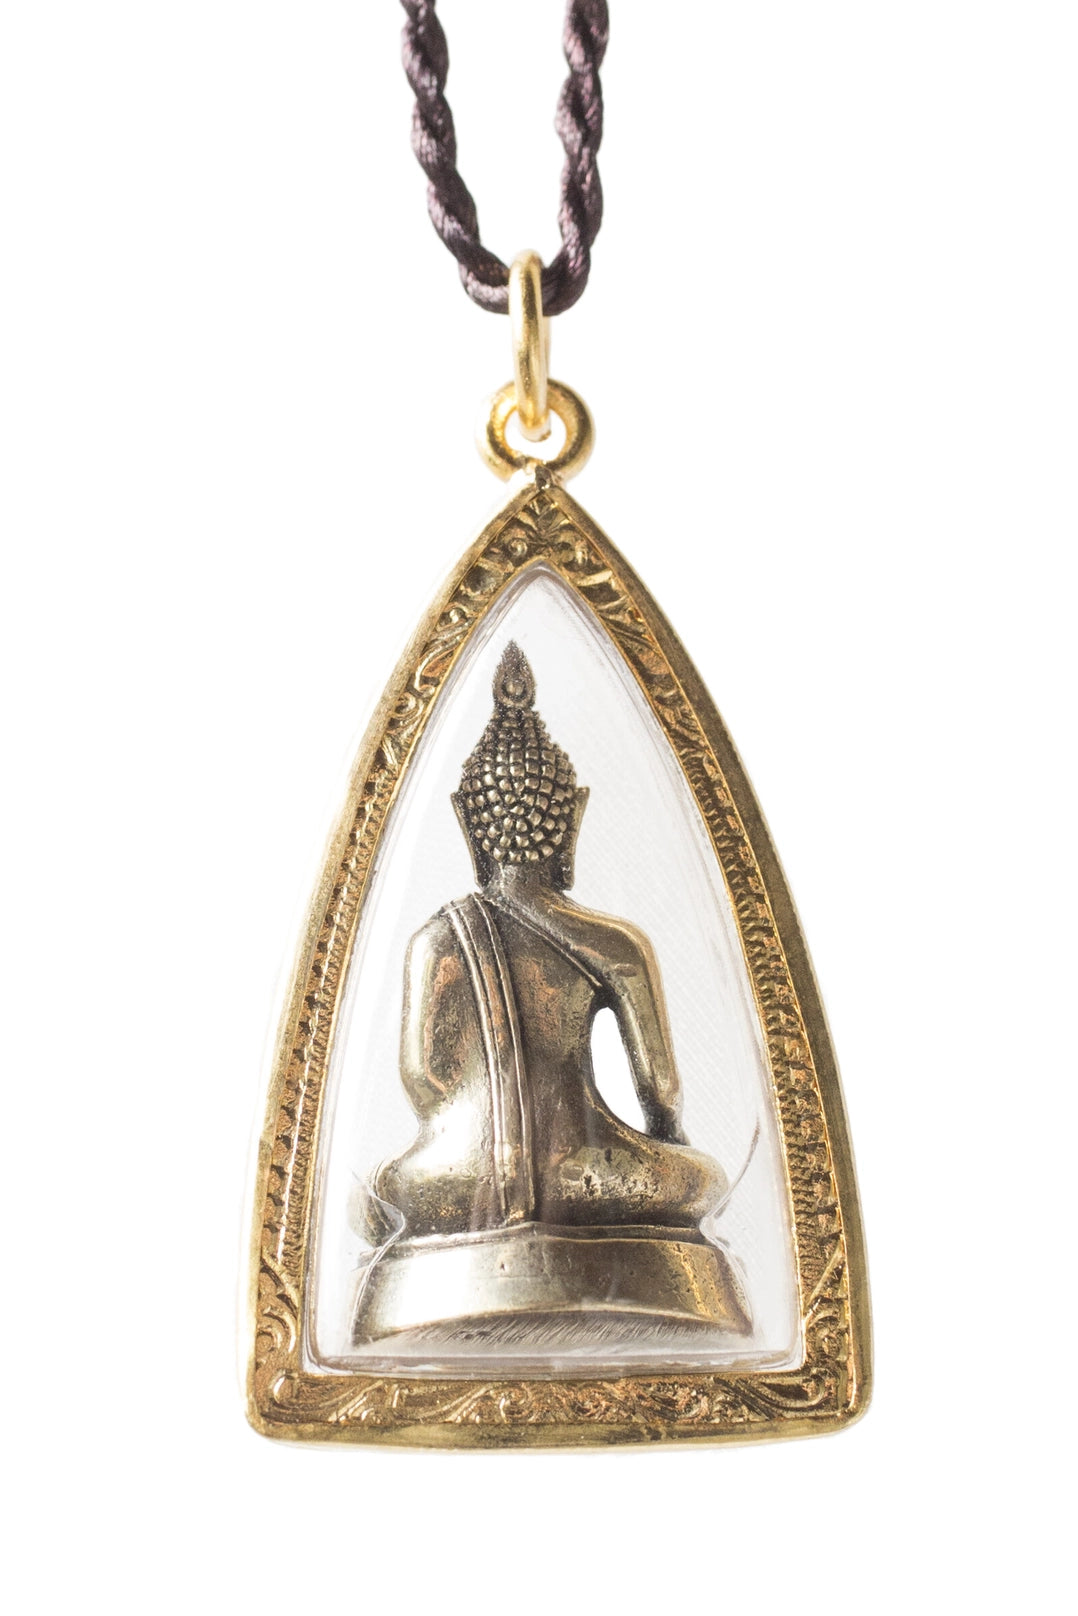 Sukhothai Earth-Touching Buddha Amulet / Pendant w Necklace - Moon Room Shop and Wellness